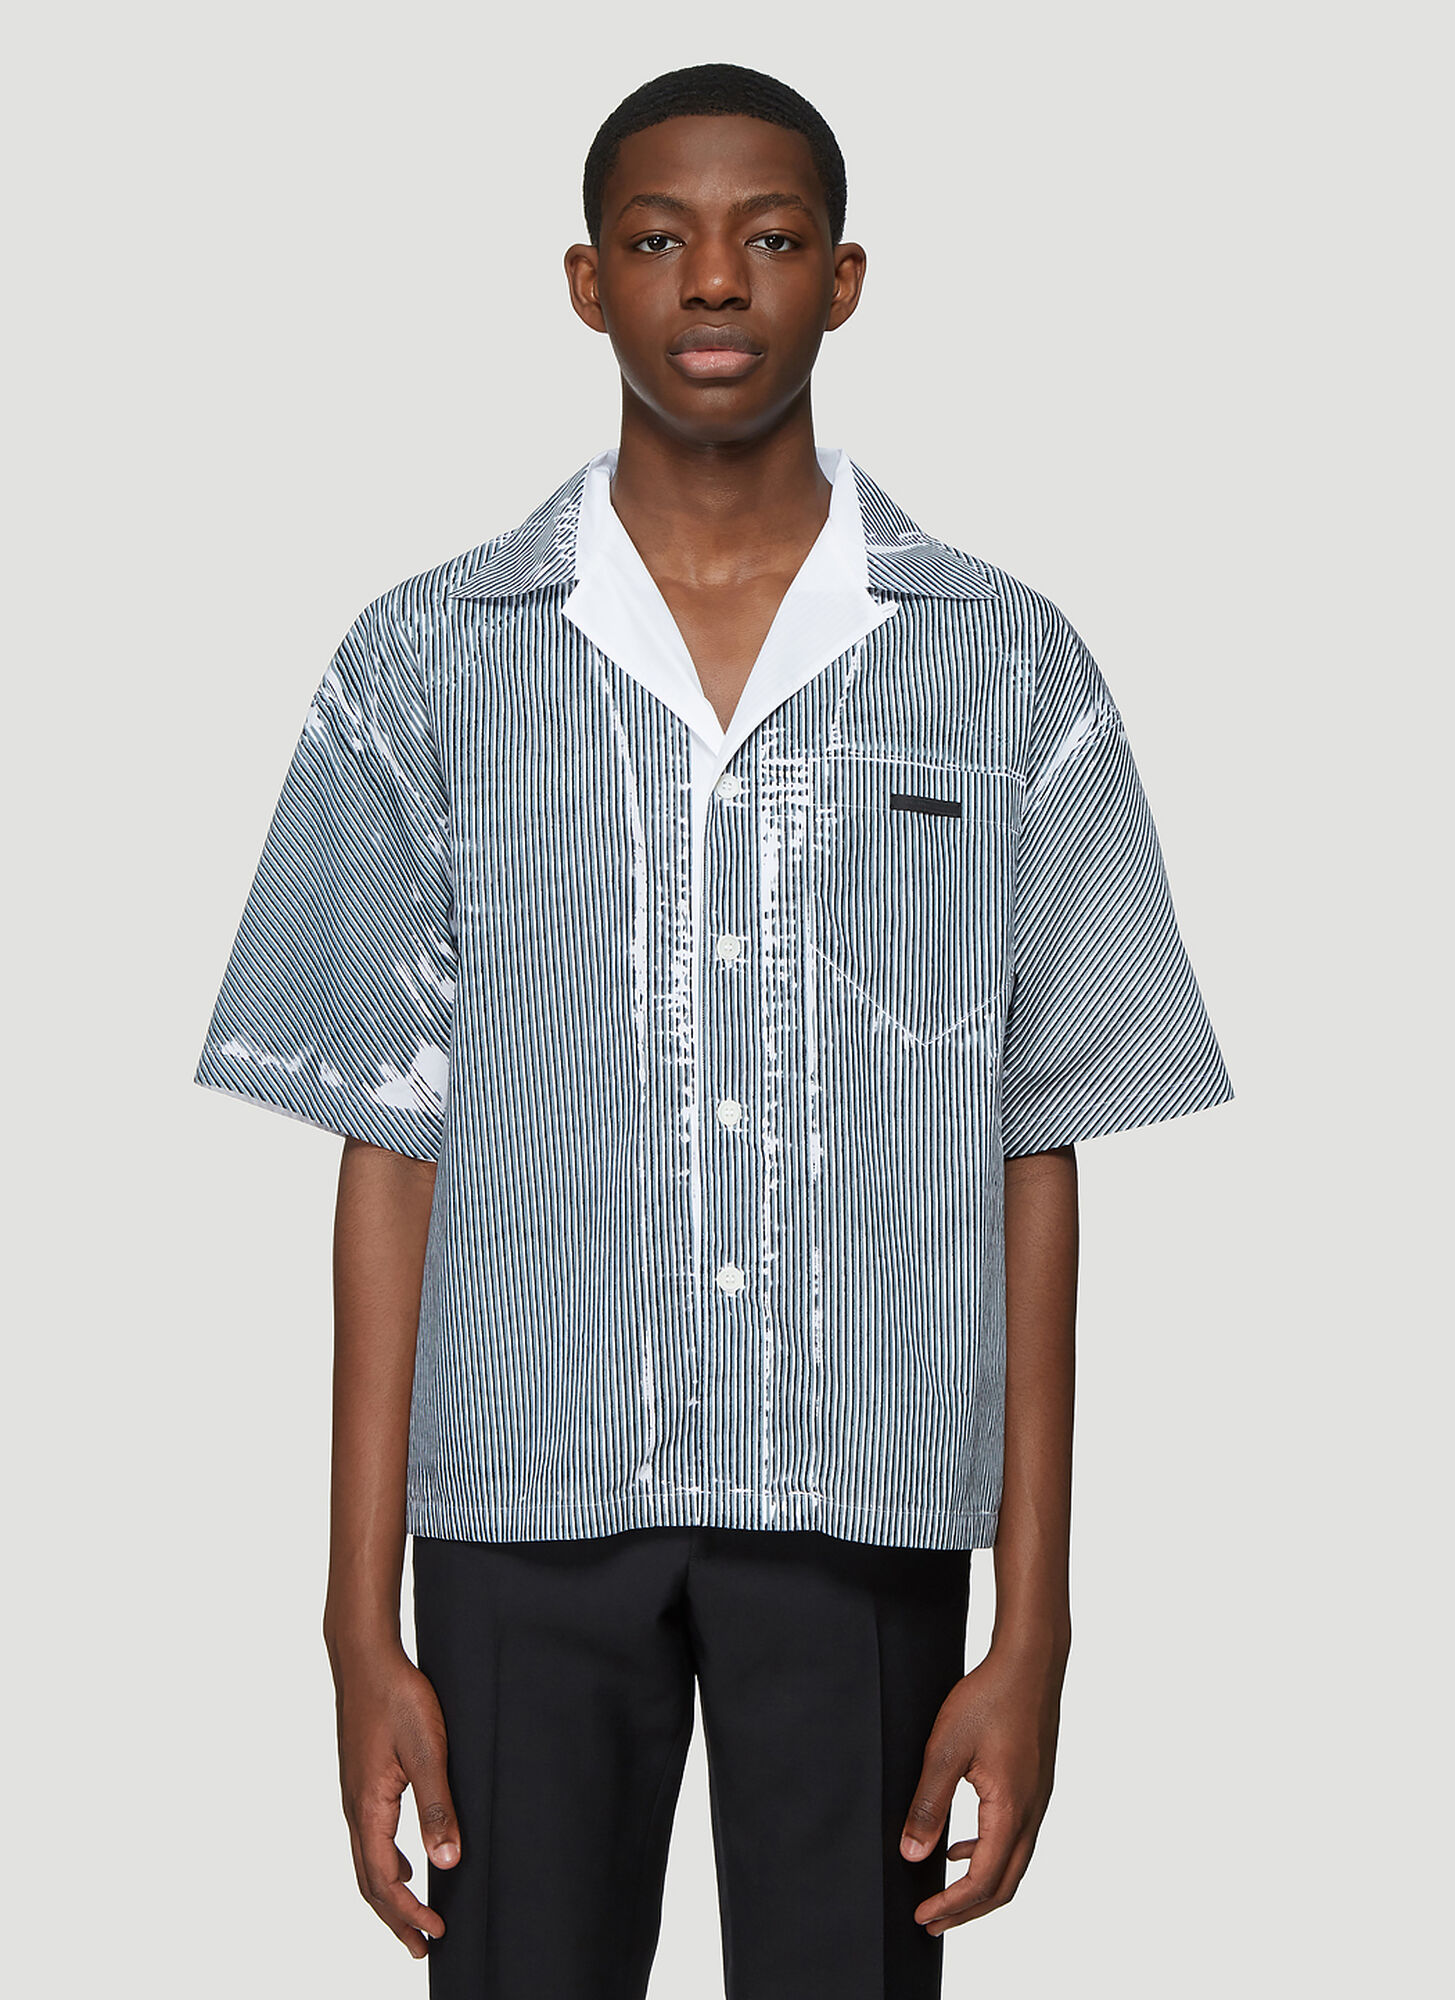 Prada Short Sleeve Stripe Shirt in White size L | The Fashionisto